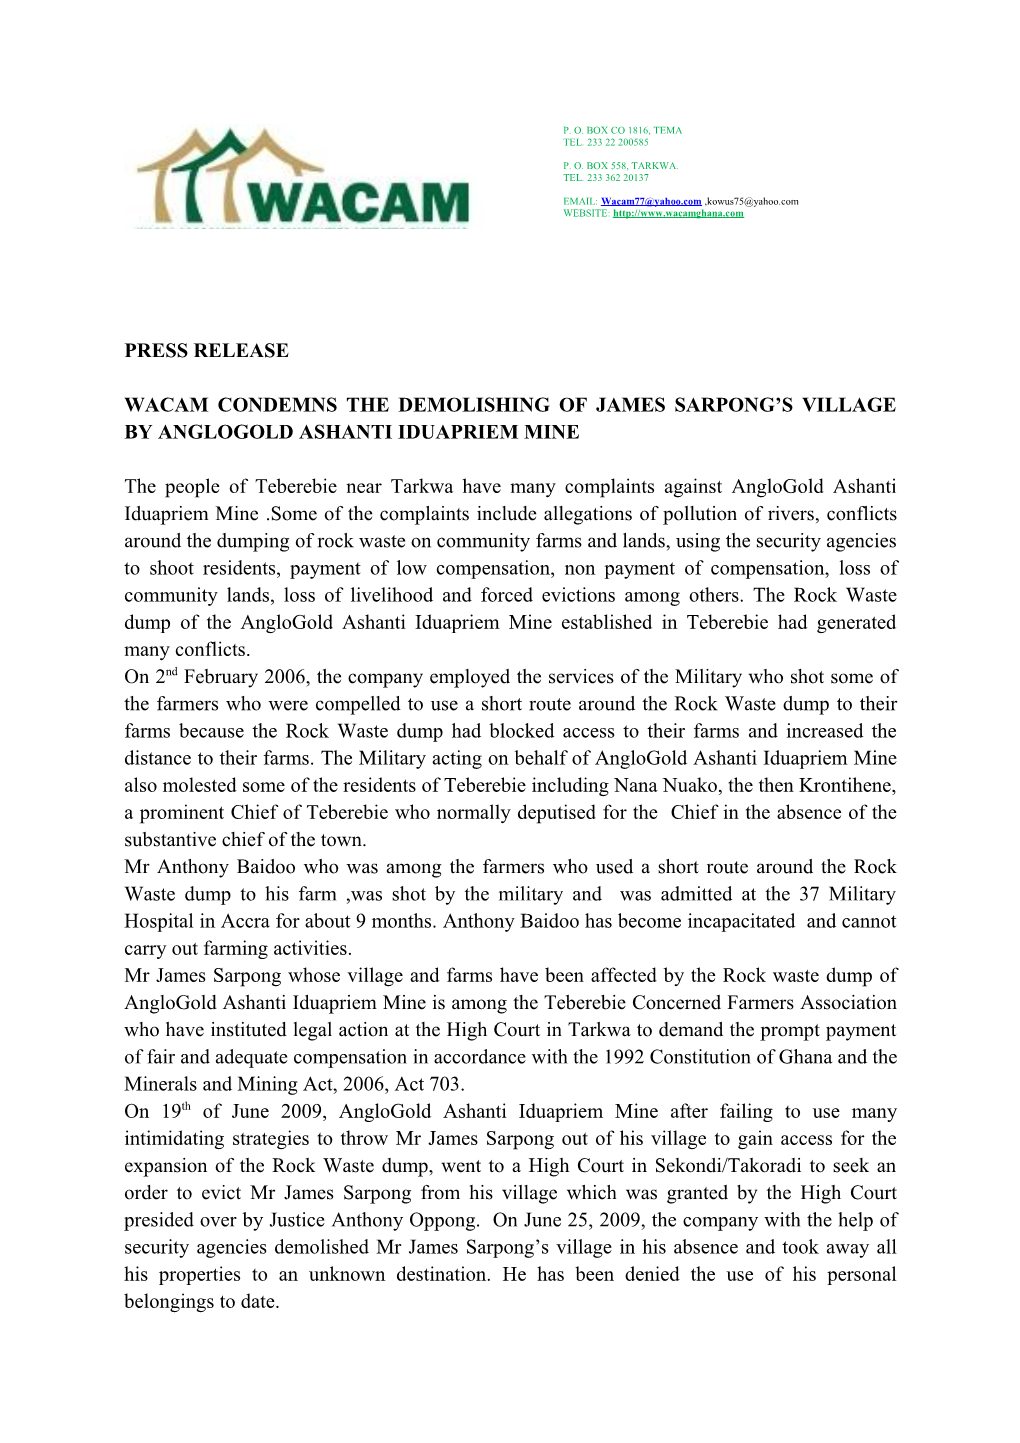 Wacam Condemns the Demolishing of James Sarpong S Village by Anglogold Ashanti Iduapriem Mine